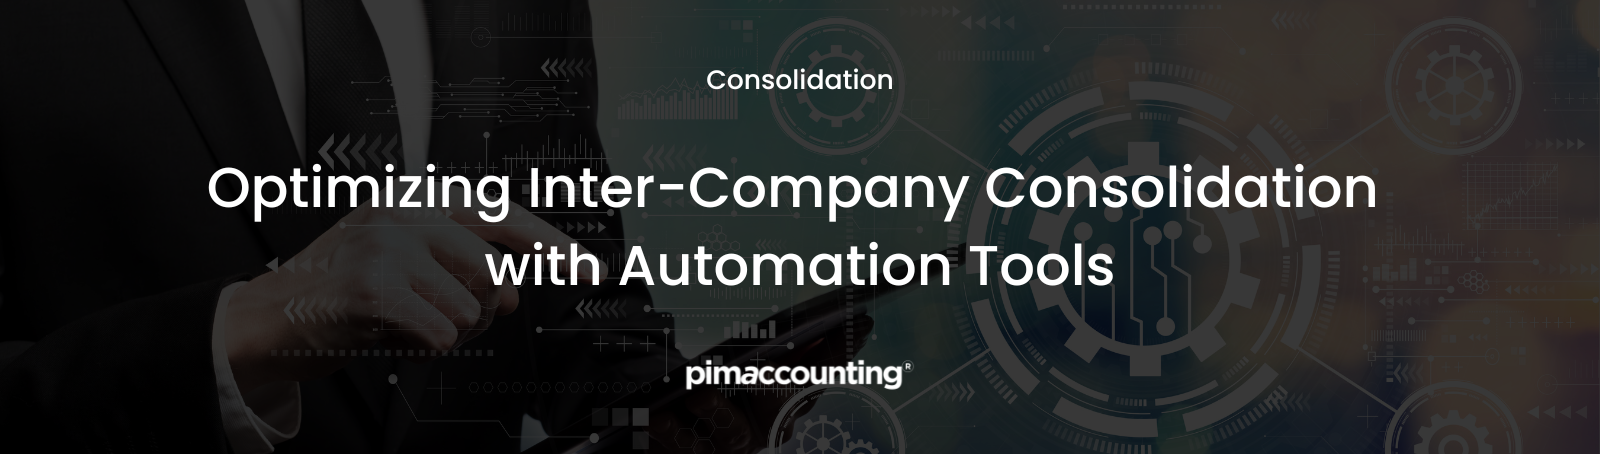 Intercompany Consolidation Optimization: Automation Tools